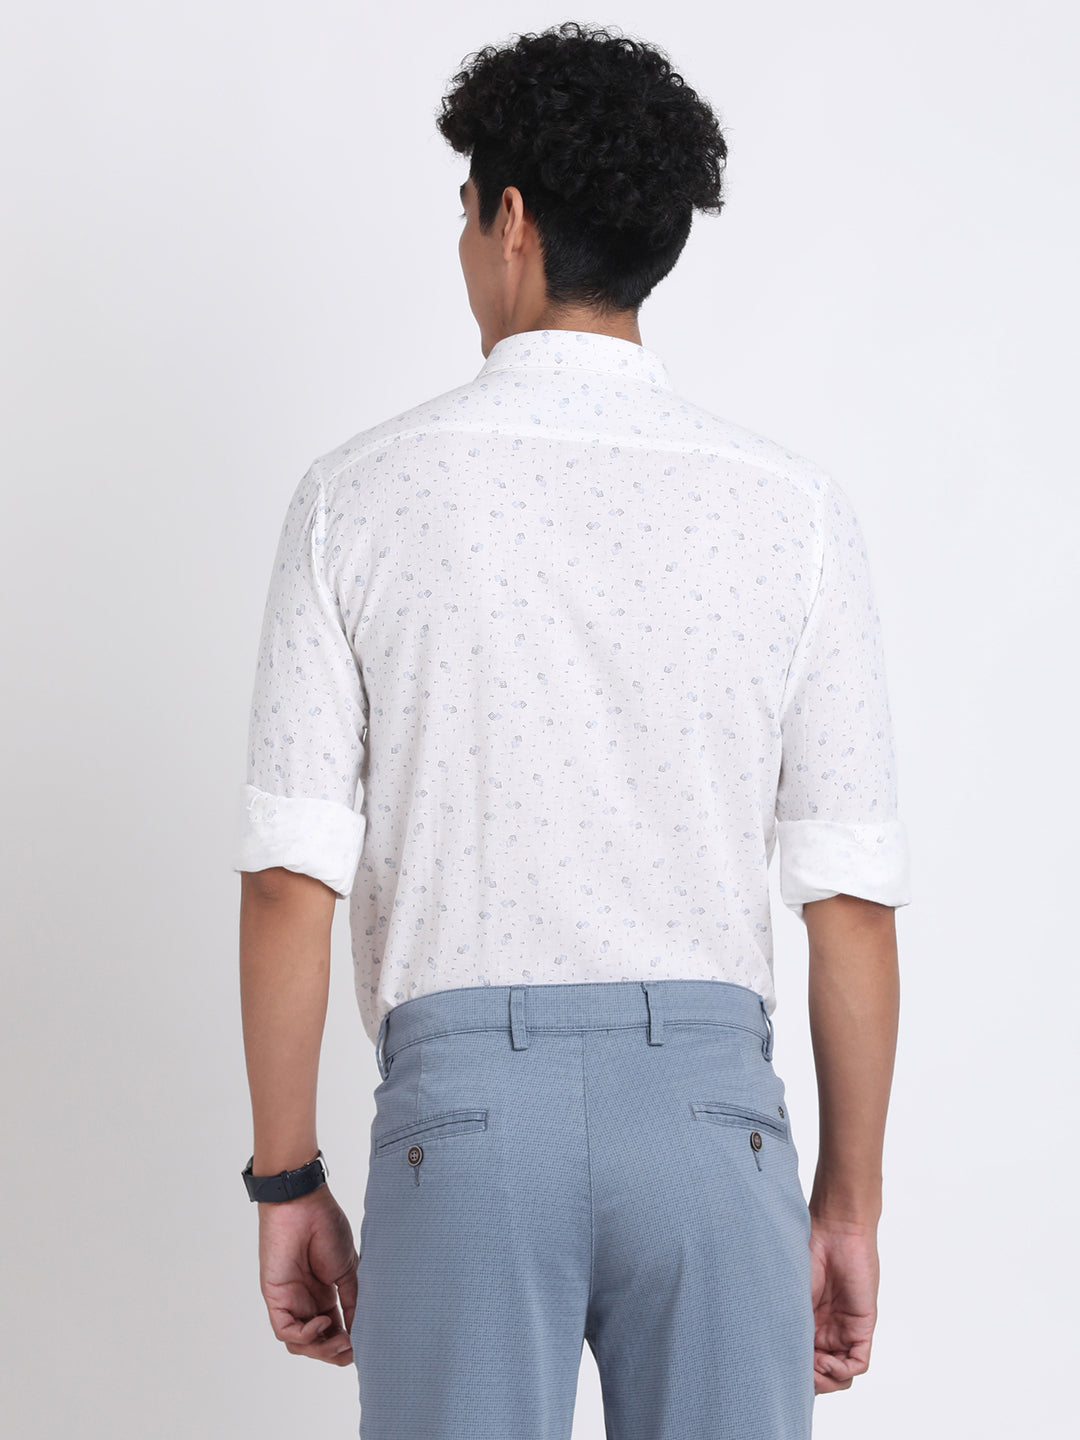 Khadi White Printed Slim Fit Full Sleeve Casual Shirt